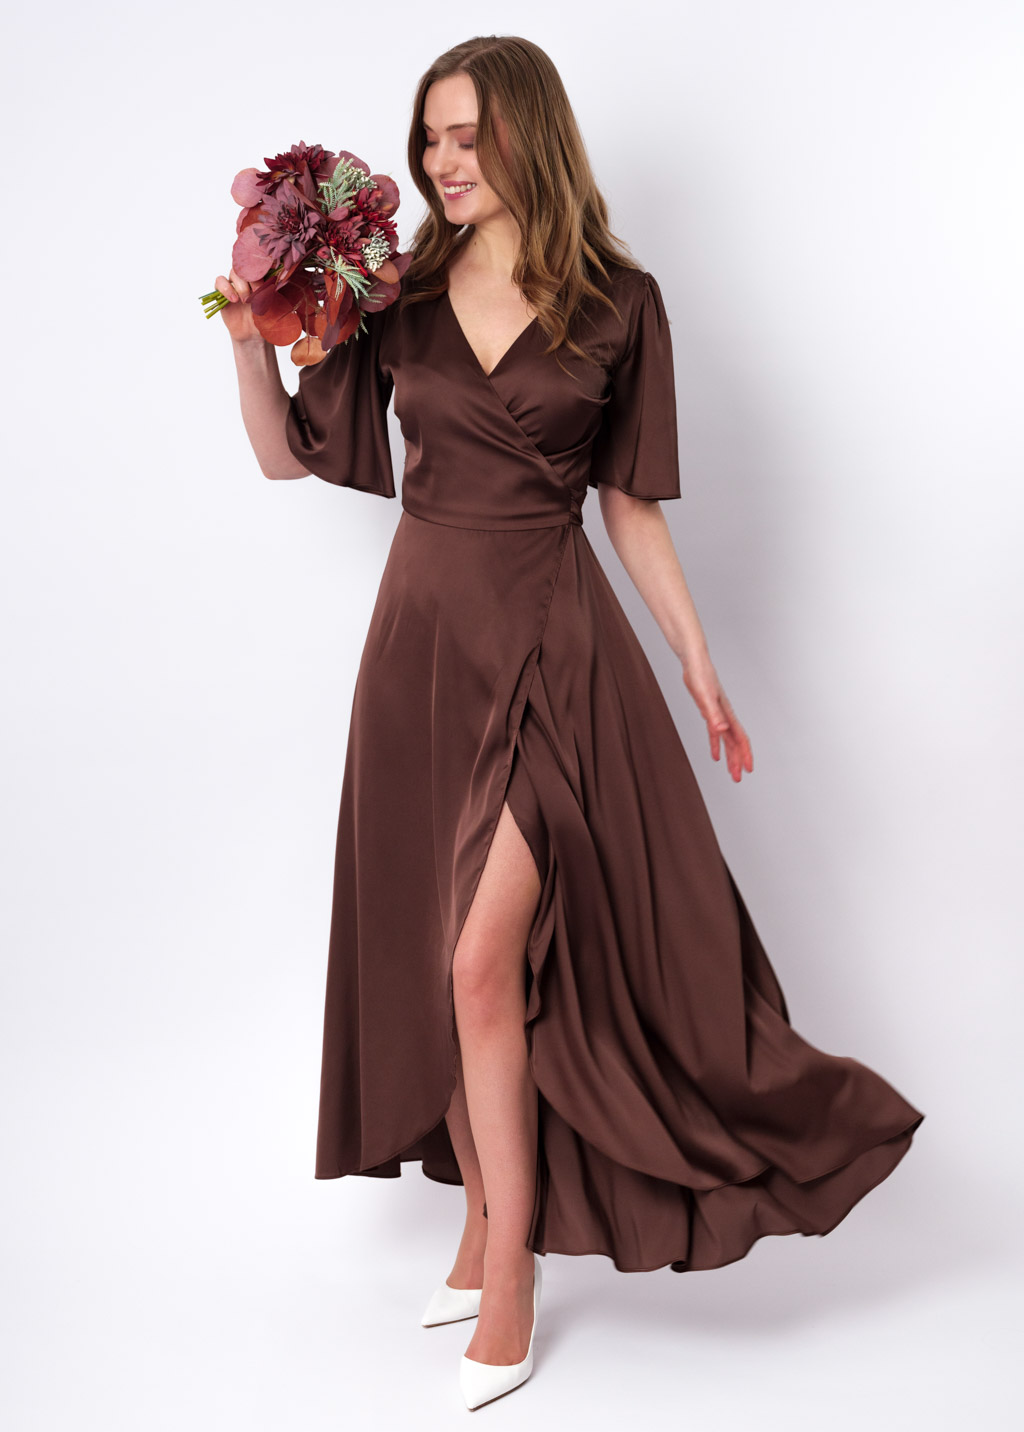 Choсolate brown silk long wrap dress